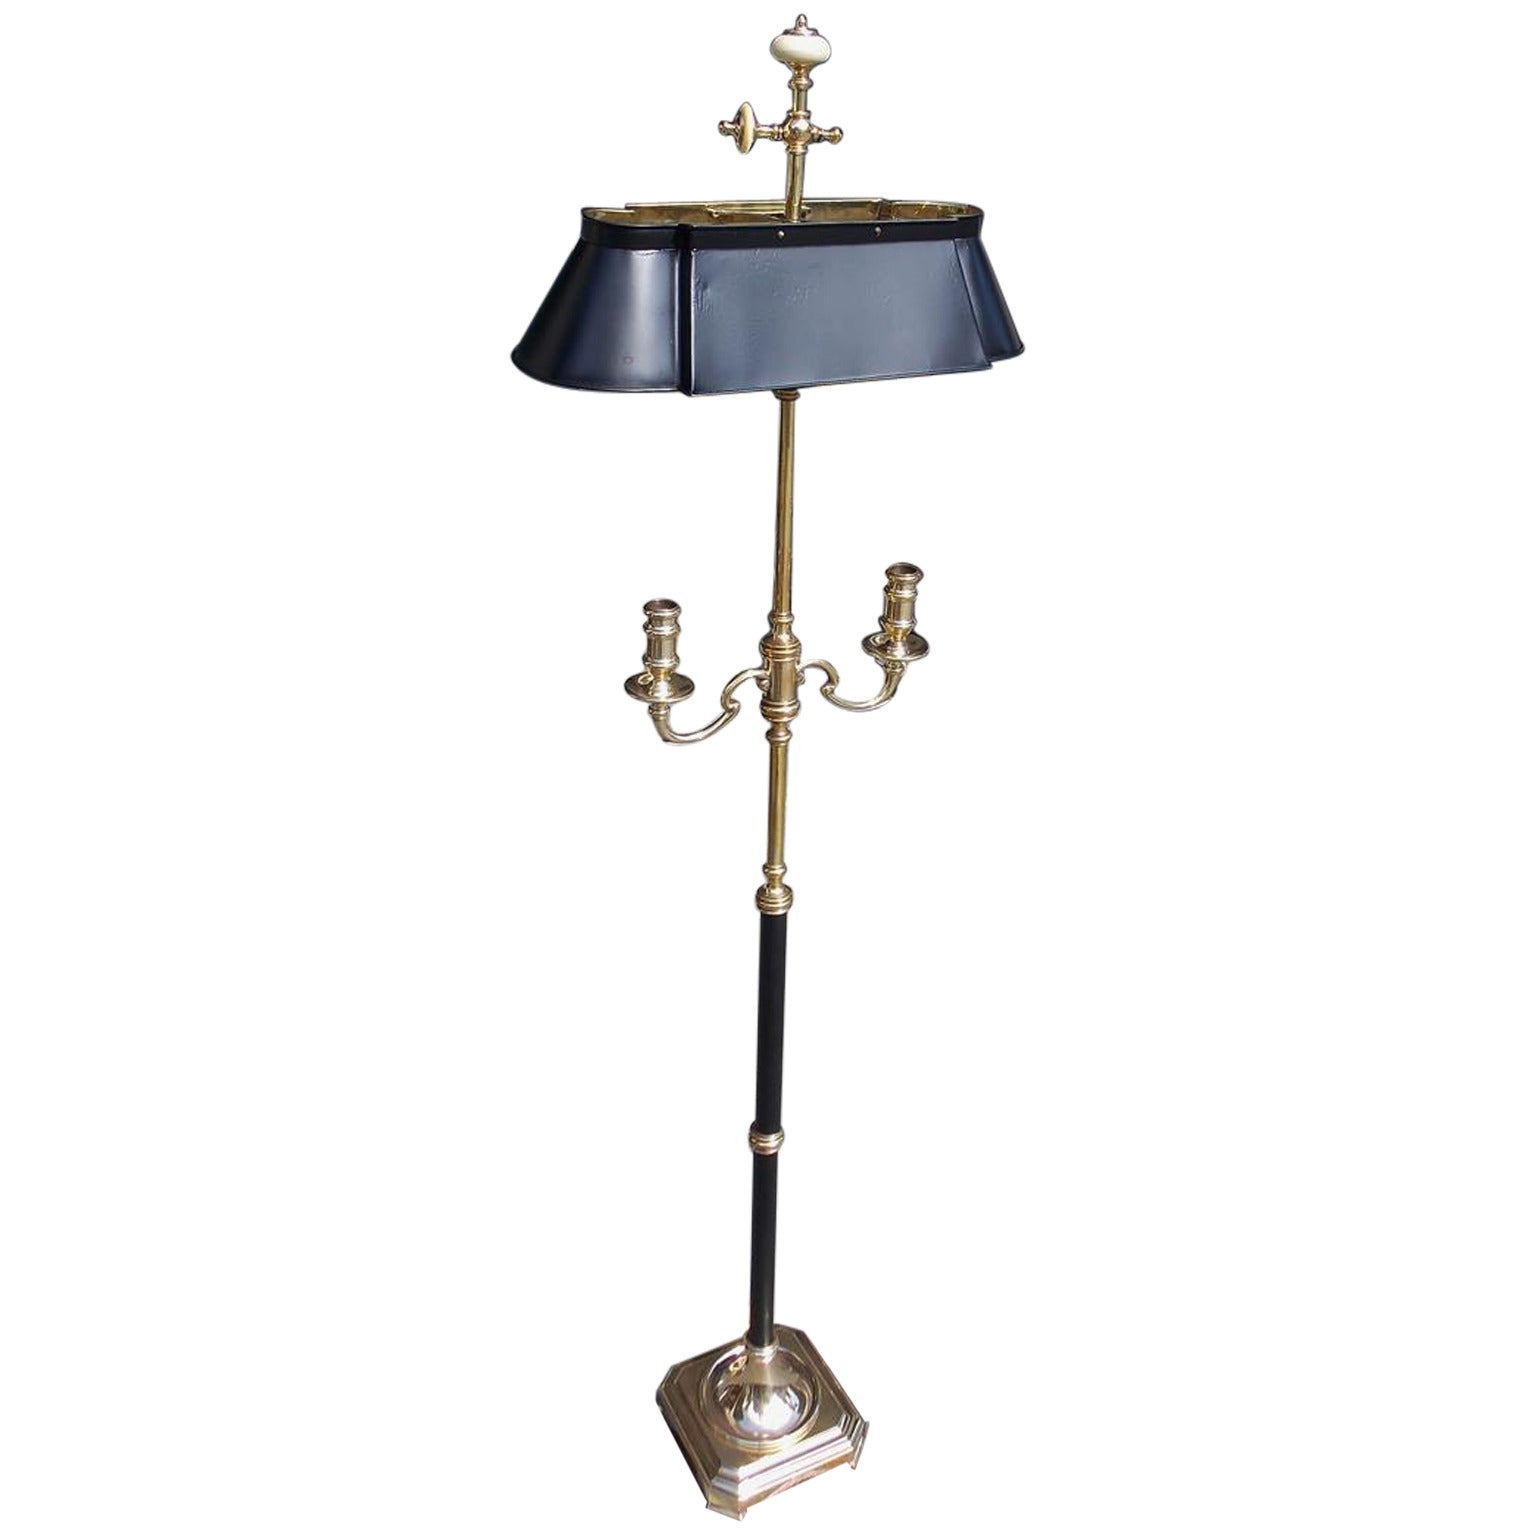 American Brass and Tin Boule Floor Lamp, Circa 1880